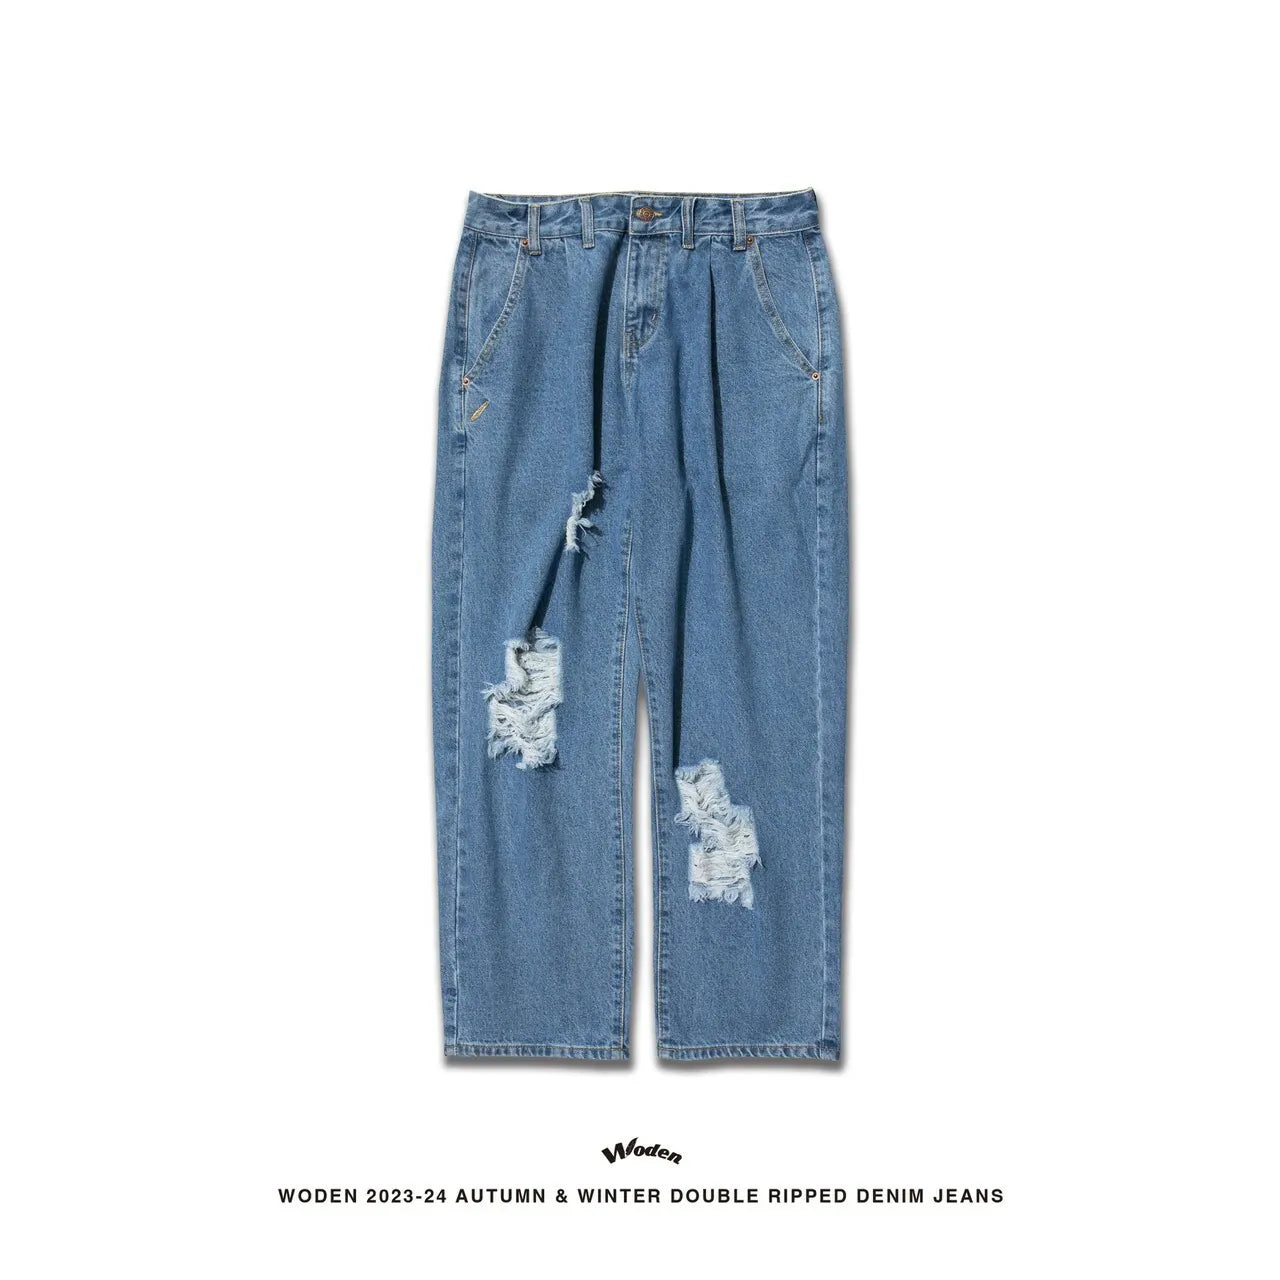 WODEN 2023-24 Autumn & Winter Double Ripped Denim Jeans